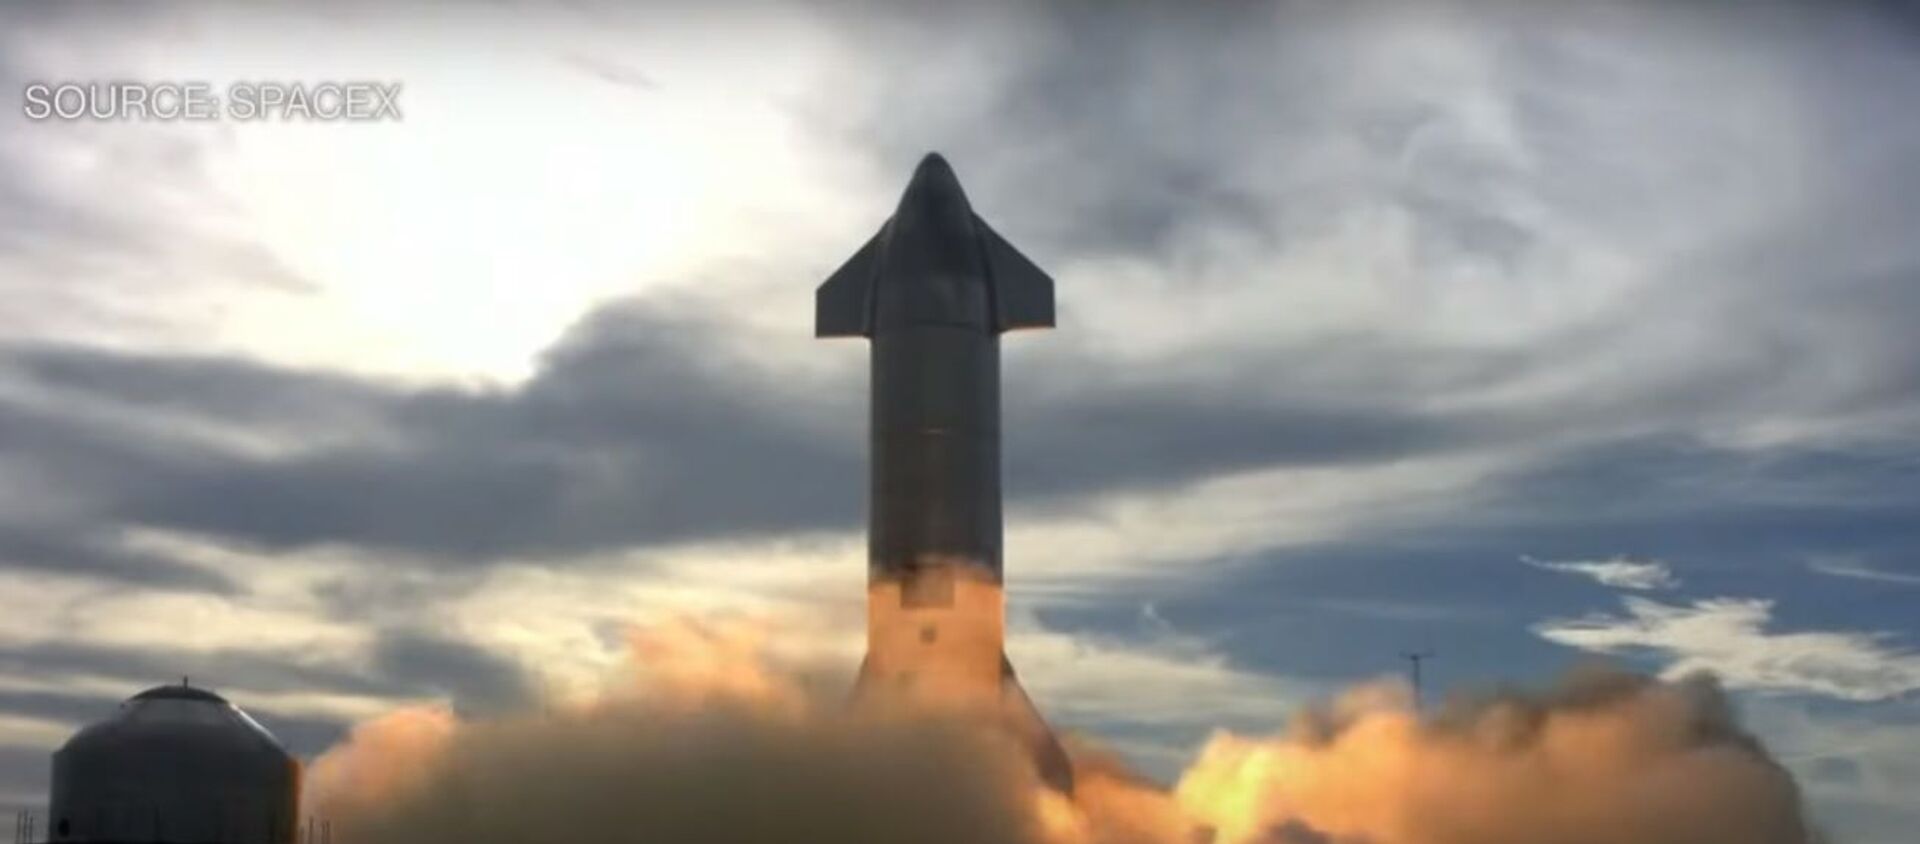 SpaceX Starship Rocket Explodes After Landing - Sputnik Узбекистан, 1920, 04.03.2021